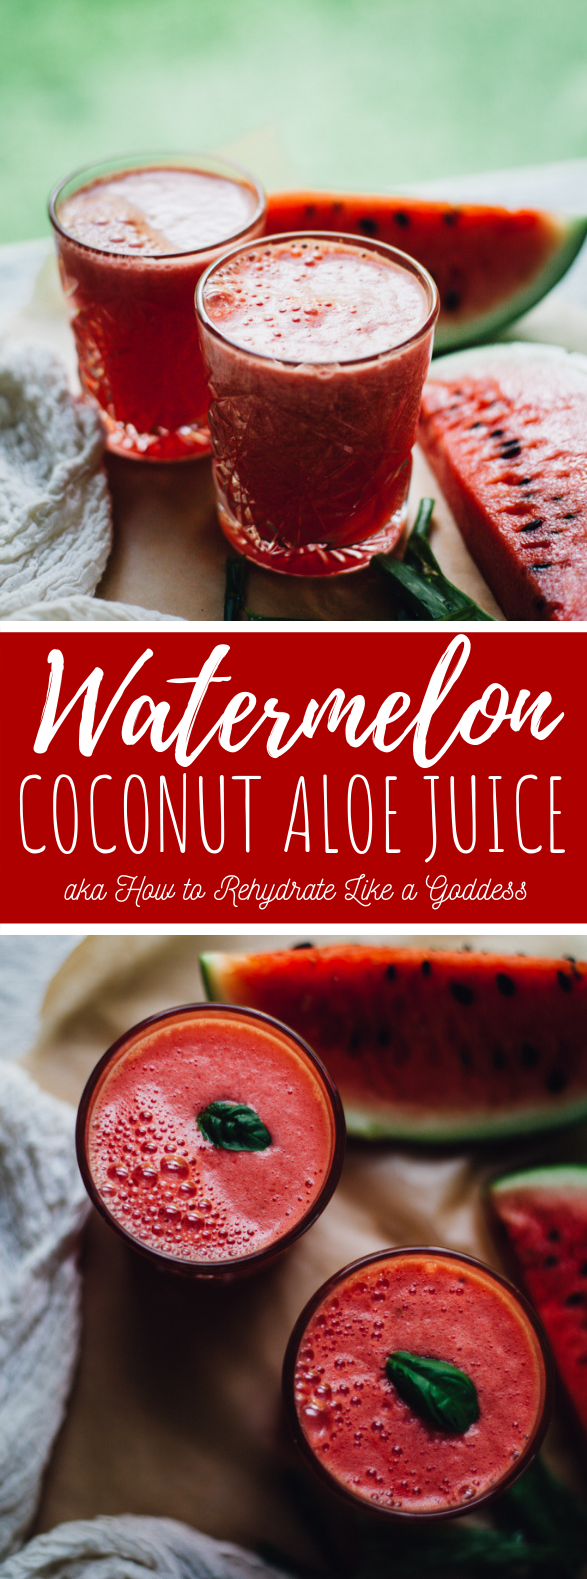 Watermelon Coconut Aloe Juice aka How to Rehydrate Like a Goddess #drinks #summer